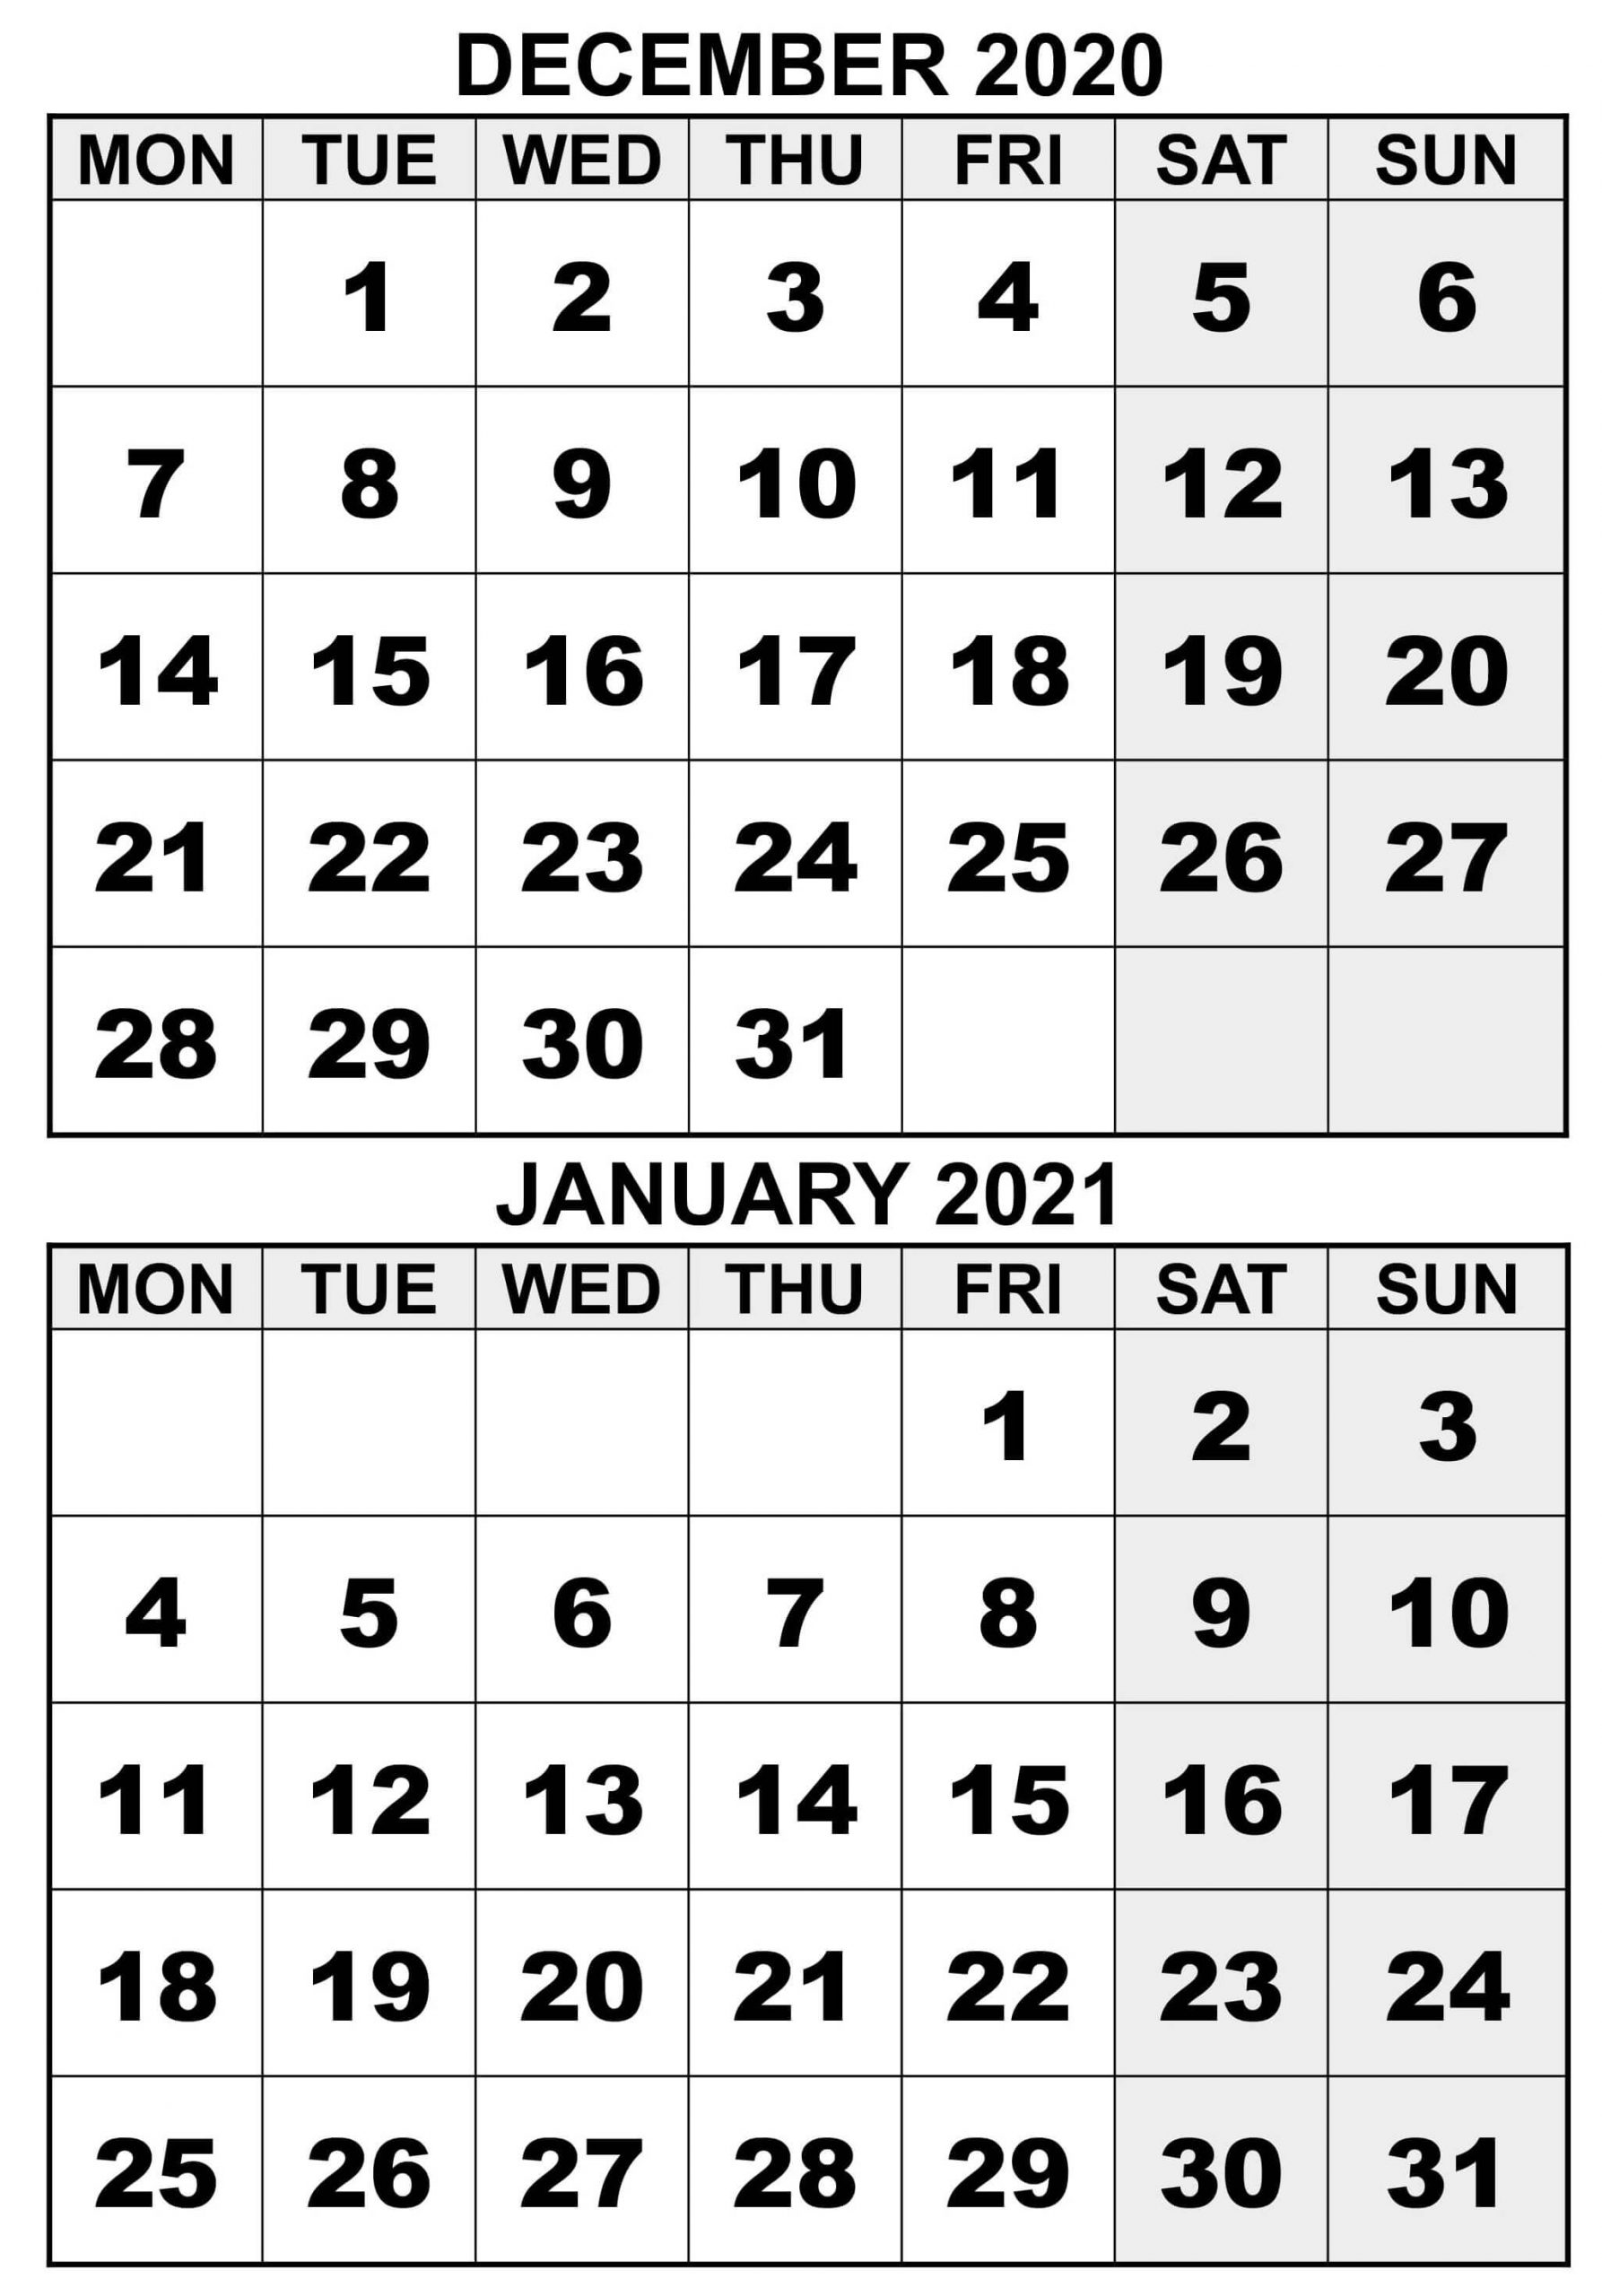 Blank 2020 December 2021 January Calendar With Holidays December 2020 And January 2021 Calendar